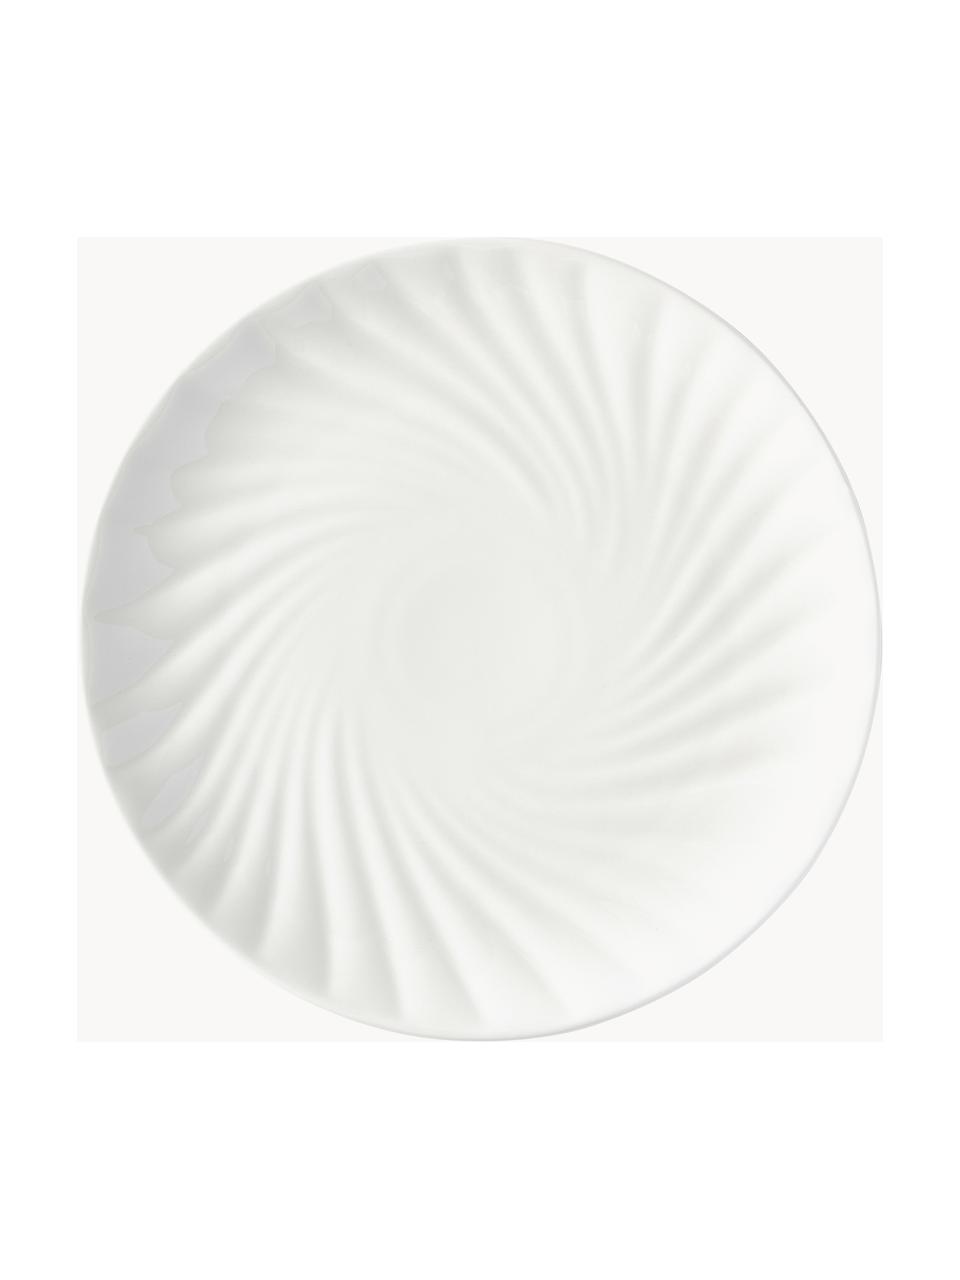 Servizio di piatti in porcellana Malina, 4 persone (12 pz), Porcellana, Bianco lucido, 4 persone (12 pz)